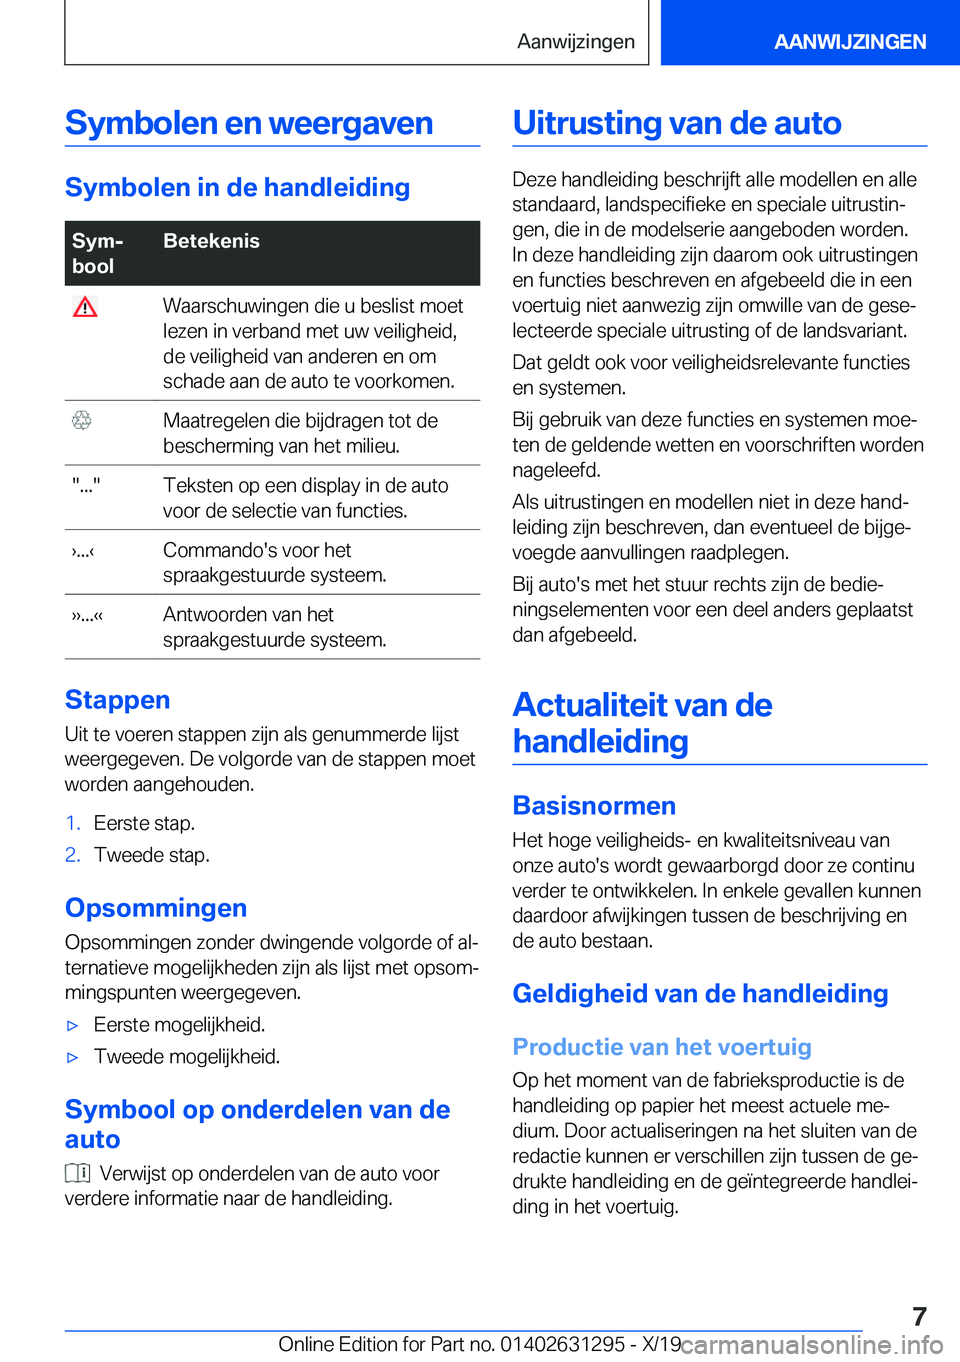 BMW M8 2020  Instructieboekjes (in Dutch) �S�y�m�b�o�l�e�n��e�n��w�e�e�r�g�a�v�e�n
�S�y�m�b�o�l�e�n��i�n��d�e��h�a�n�d�l�e�i�d�i�n�g
�S�y�mj
�b�o�o�l�B�e�t�e�k�e�n�i�s��W�a�a�r�s�c�h�u�w�i�n�g�e�n��d�i�e��u��b�e�s�l�i�s�t��m�o�e�t
